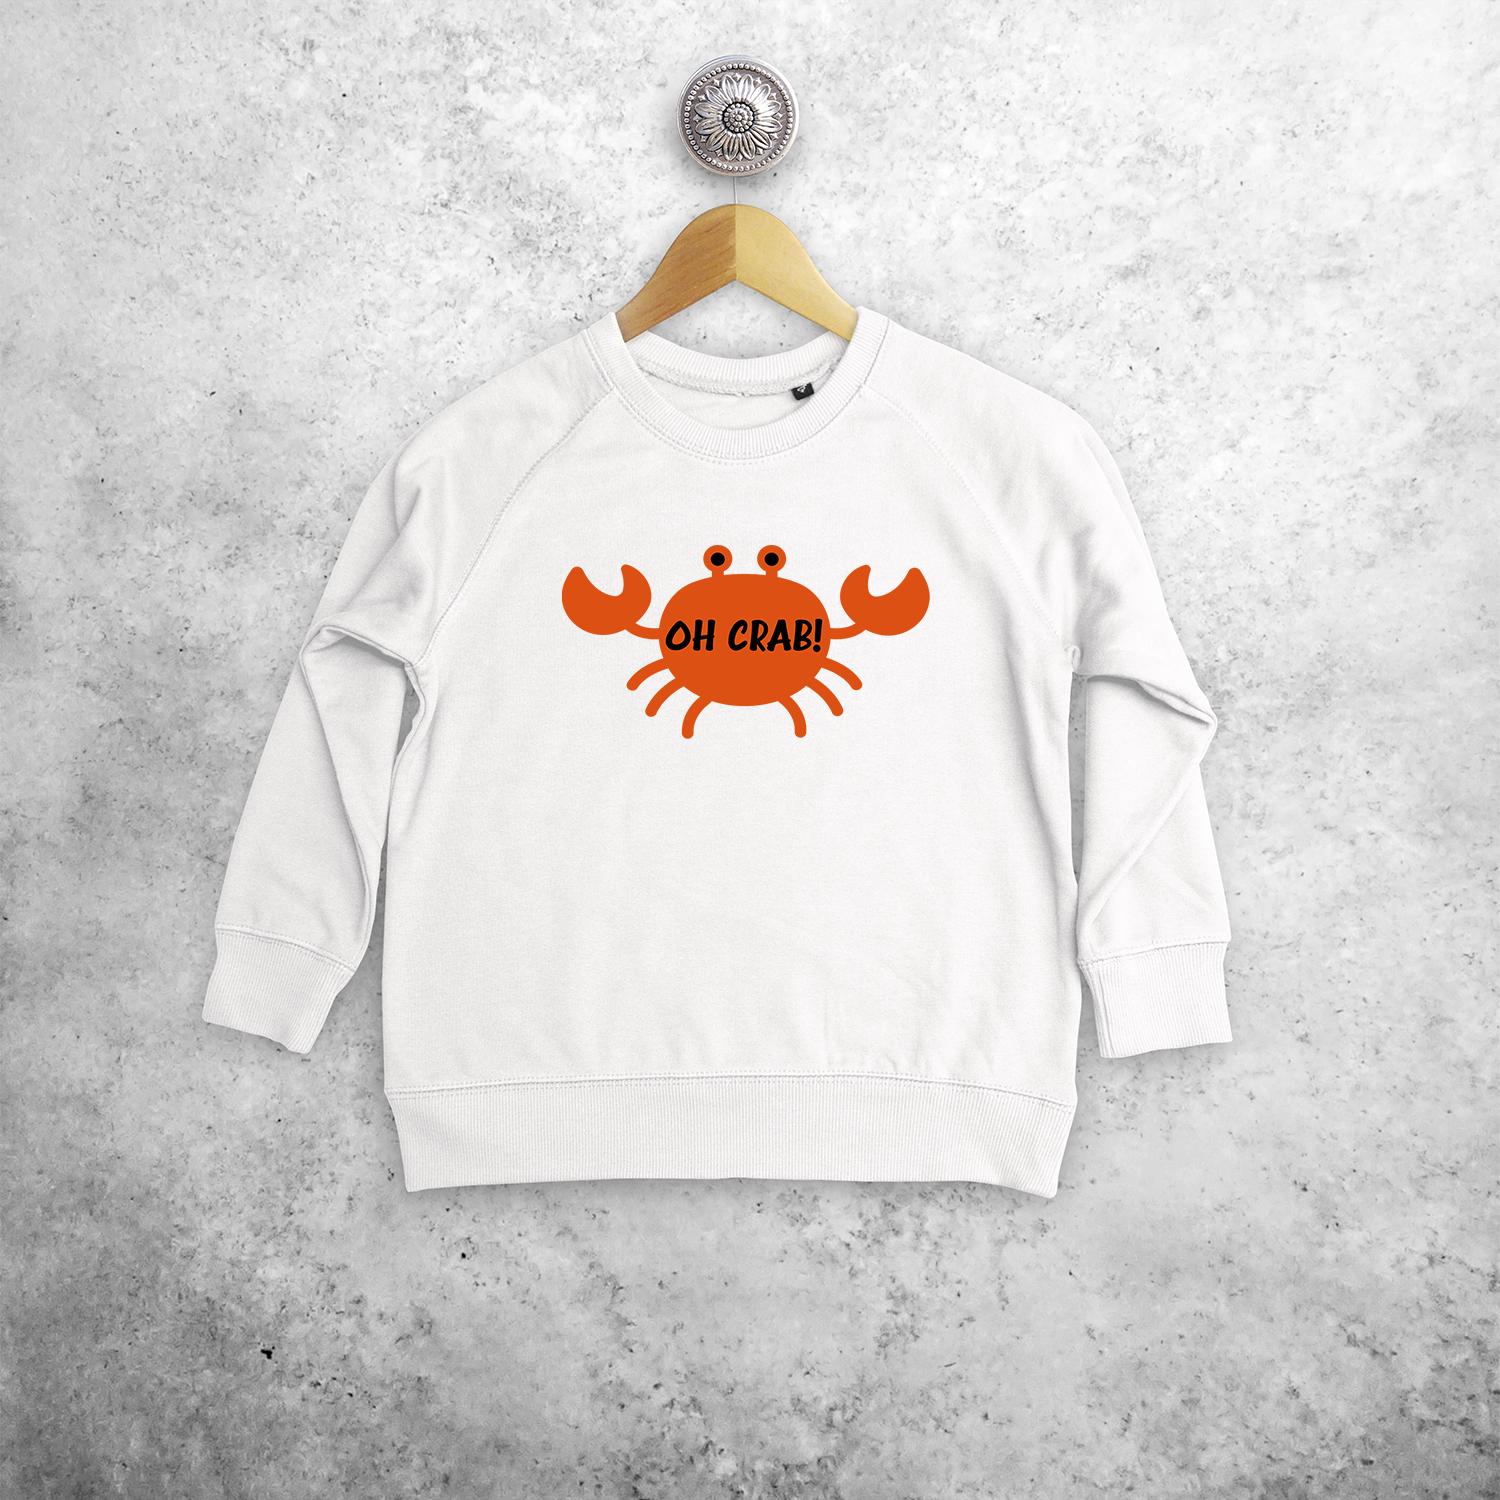 'Oh crab!' kids sweater